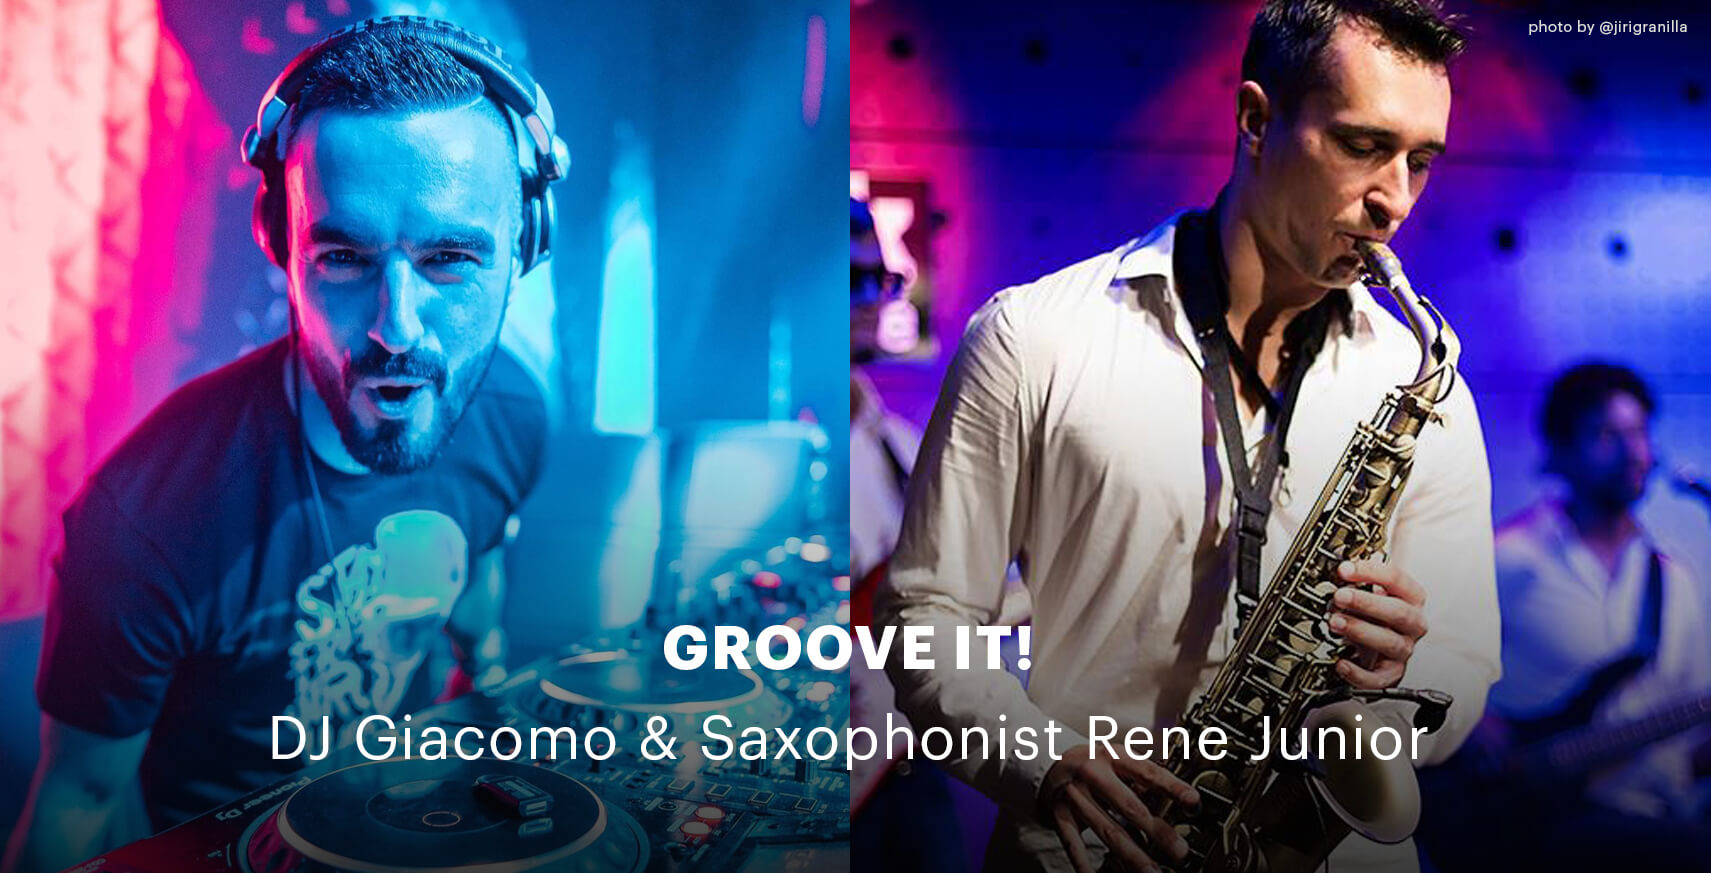 Groove it! DJ Giacomo & Saxophonist, 10/02